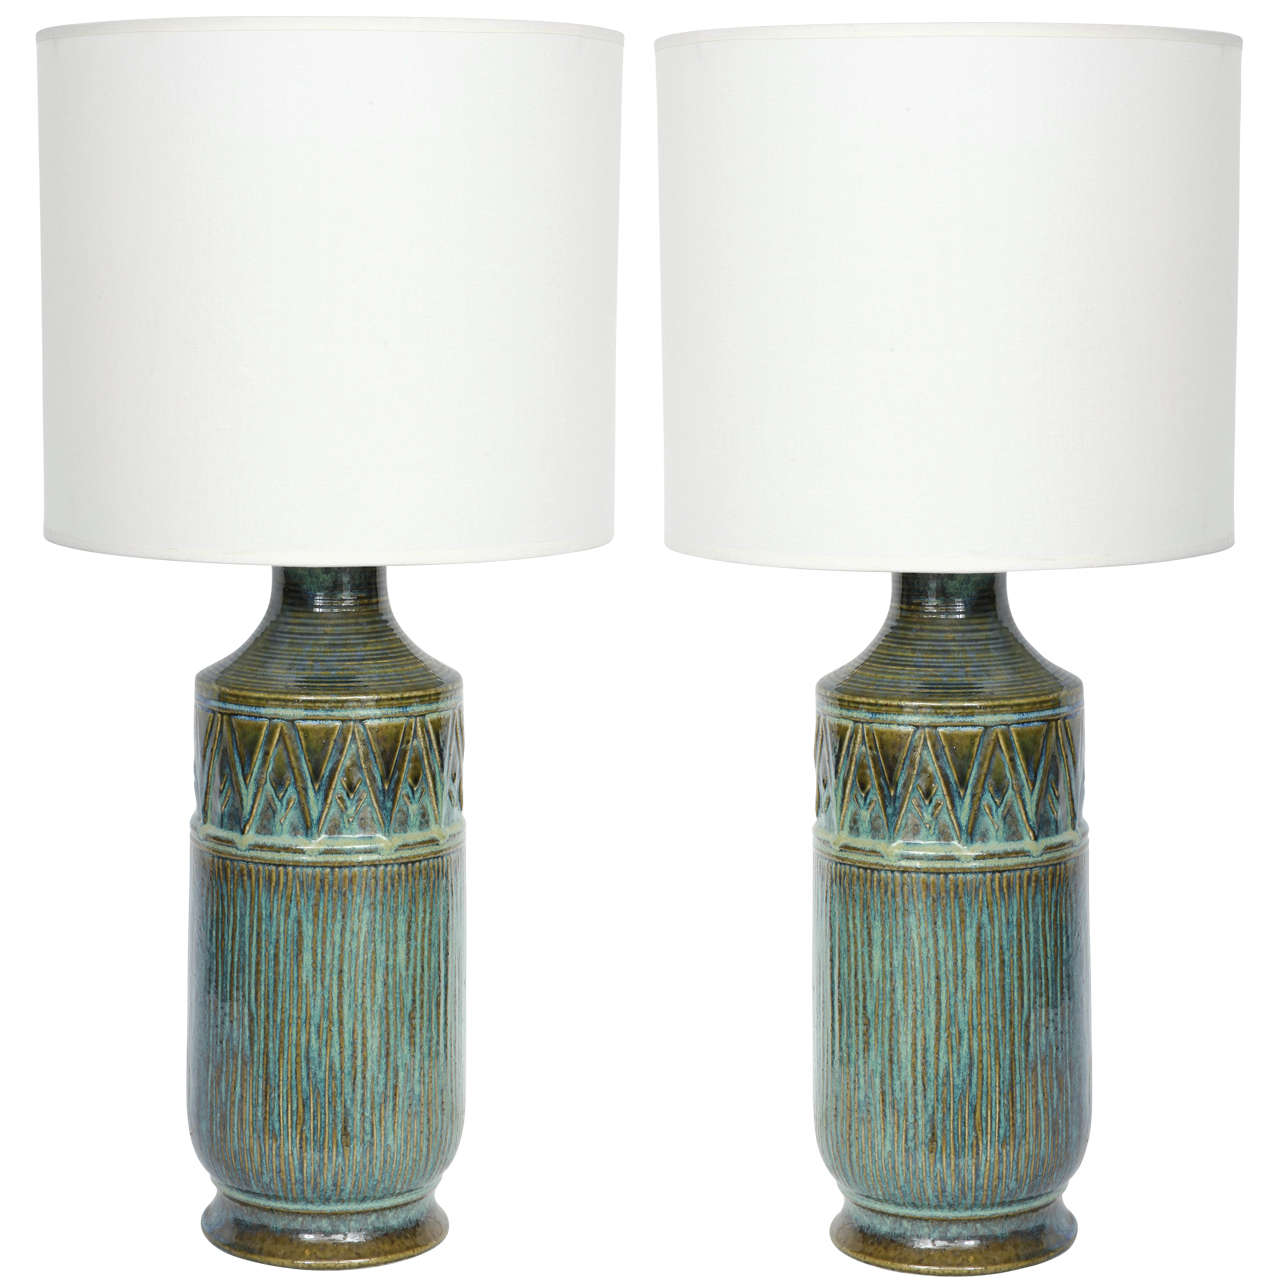 Danish Modern Blue and Green Glazed Ceramic Lamps